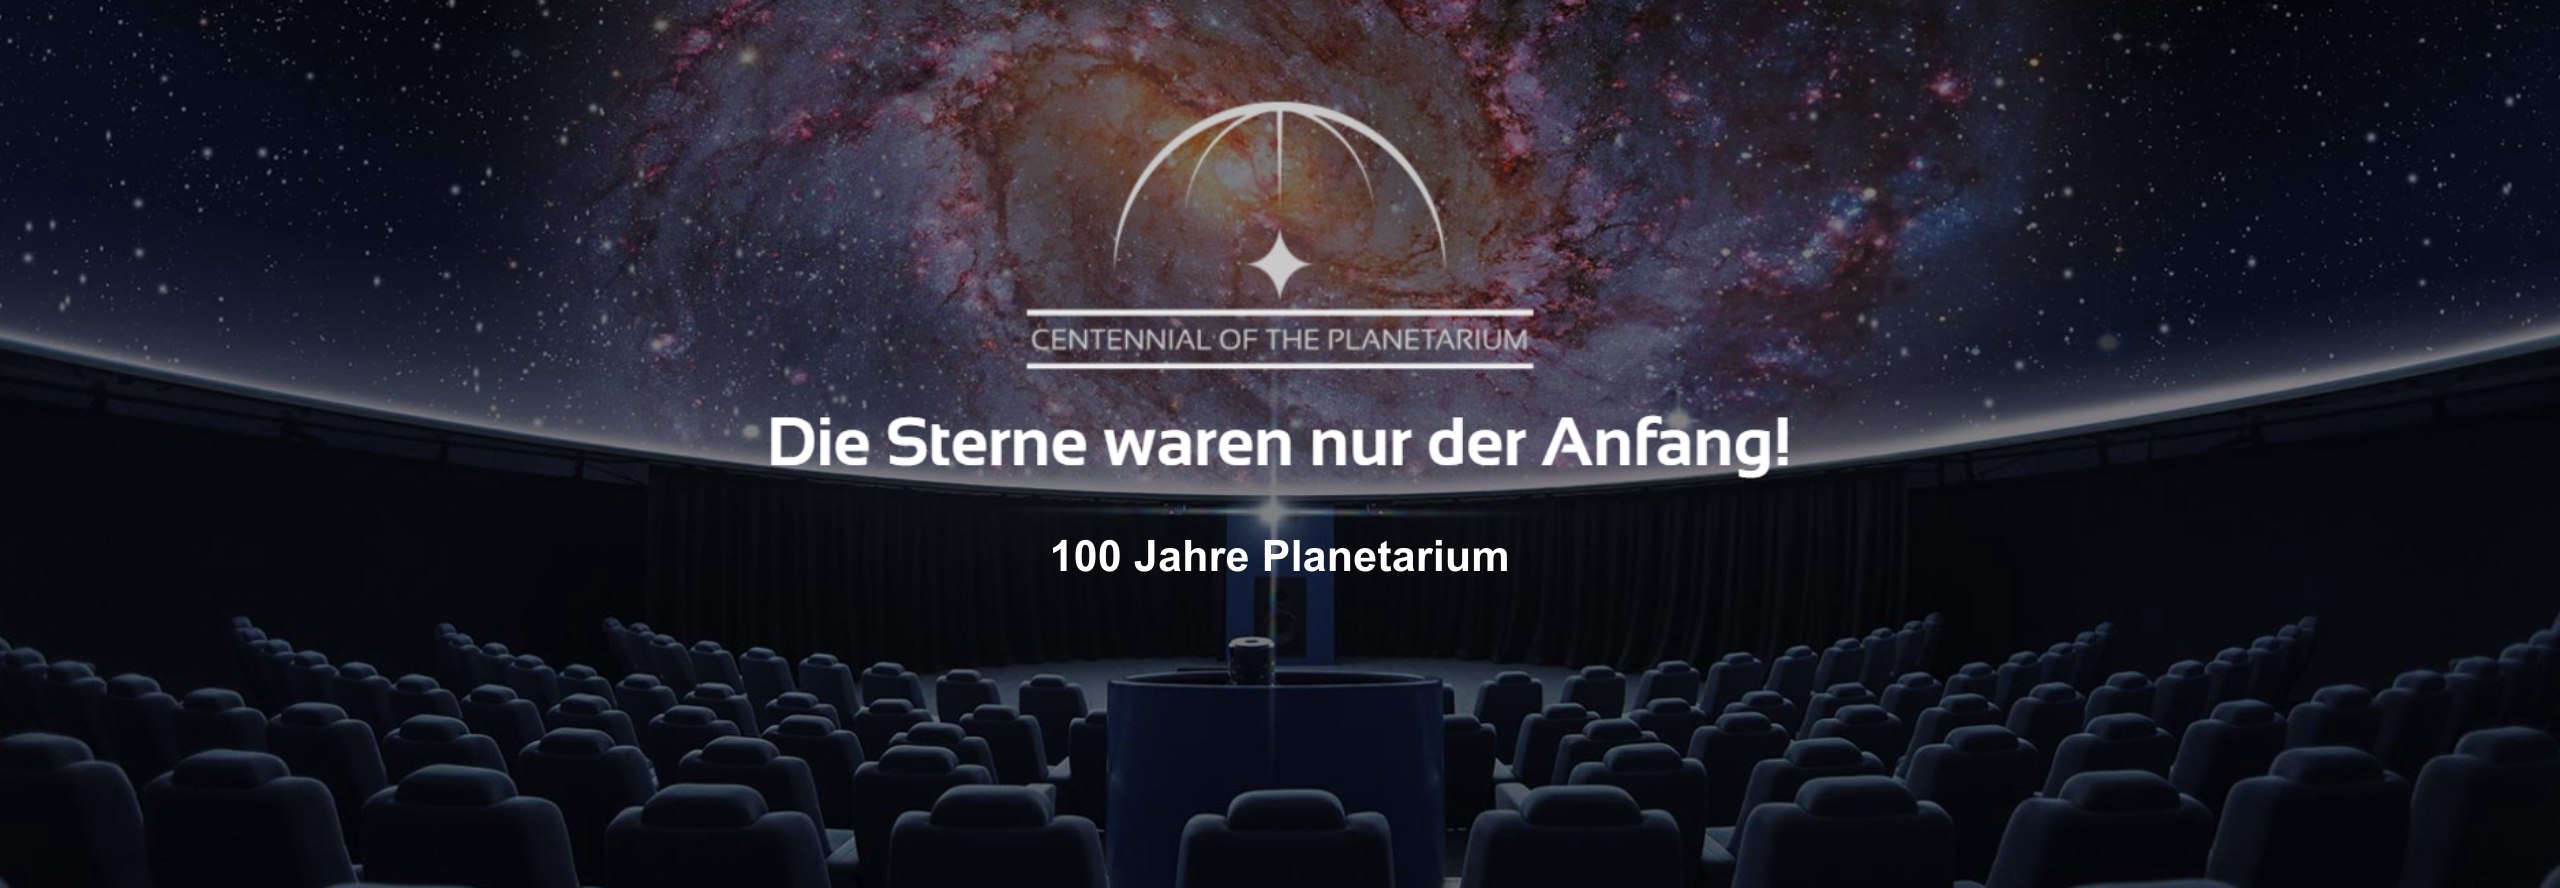 Runder Planetariumssaal mit Sesseln, versenktem Sternenprojektor und Sternennebelbild in der halbkugelförmigen Kuppel